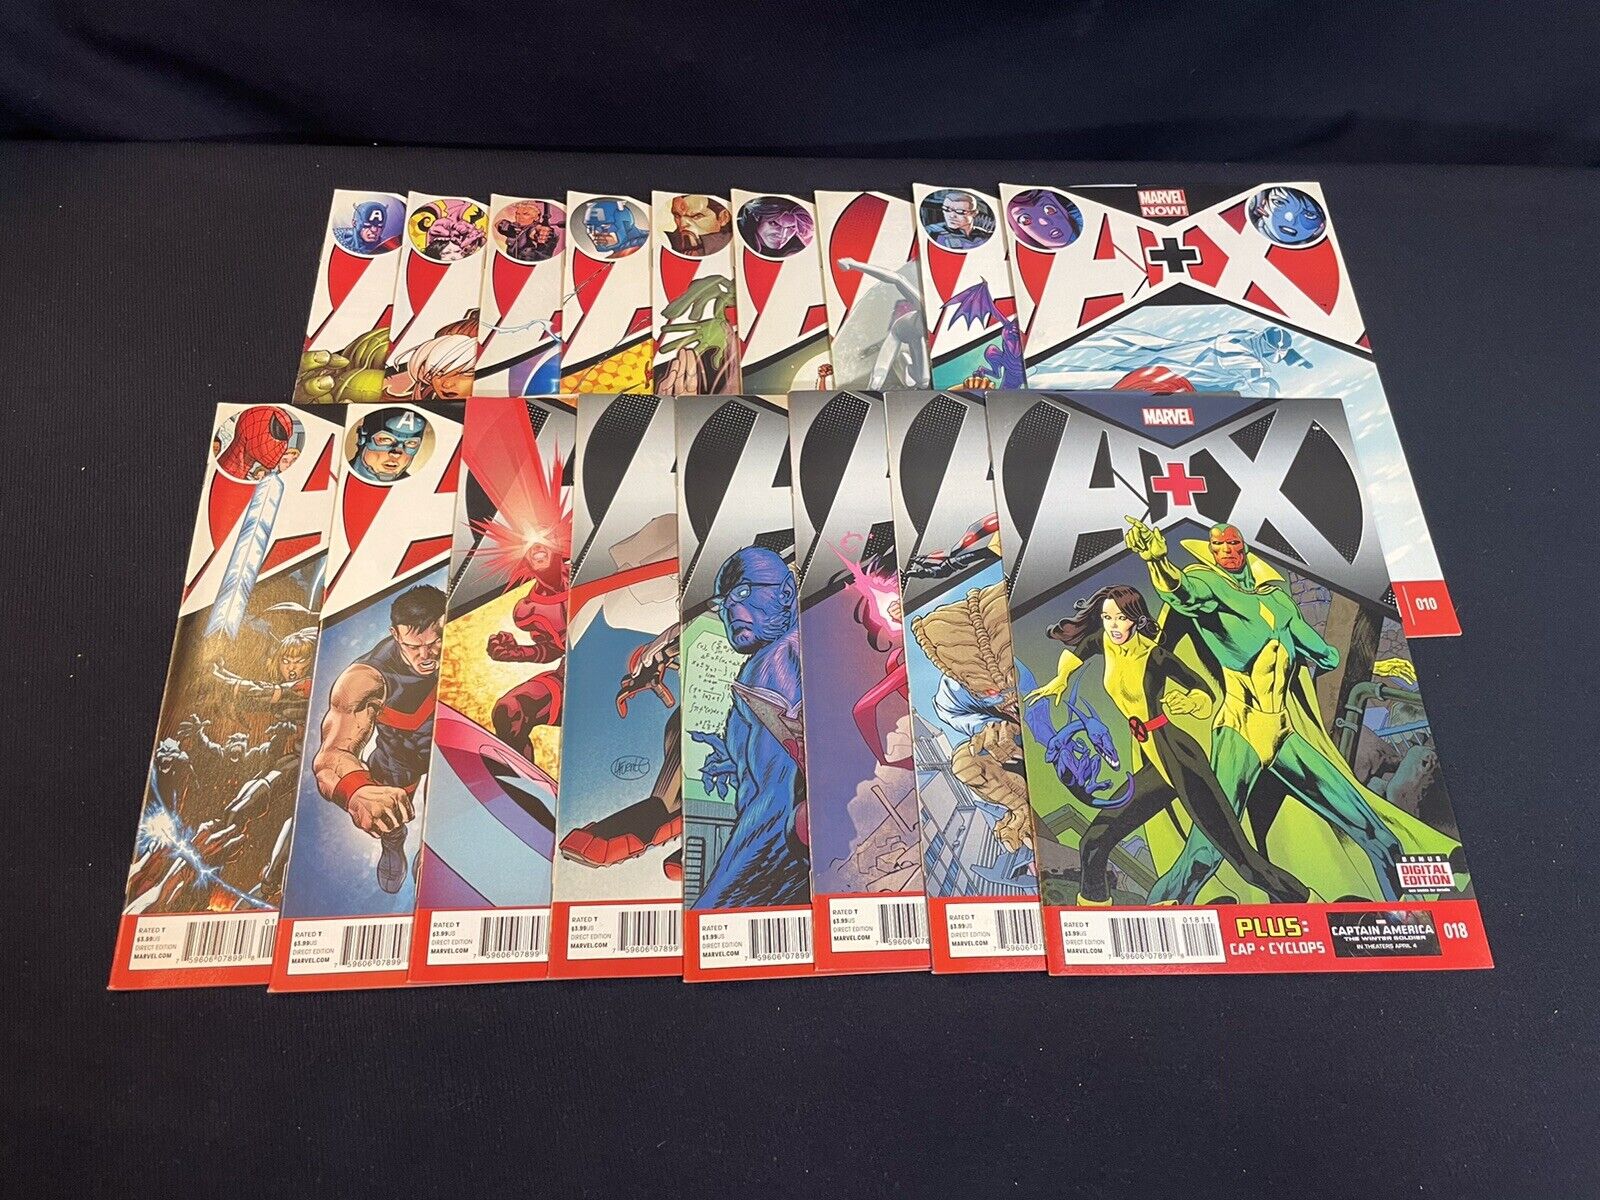 A + X #1-18 Marvel Avengers X-Men 2012 (Missing #9); 17 comics total